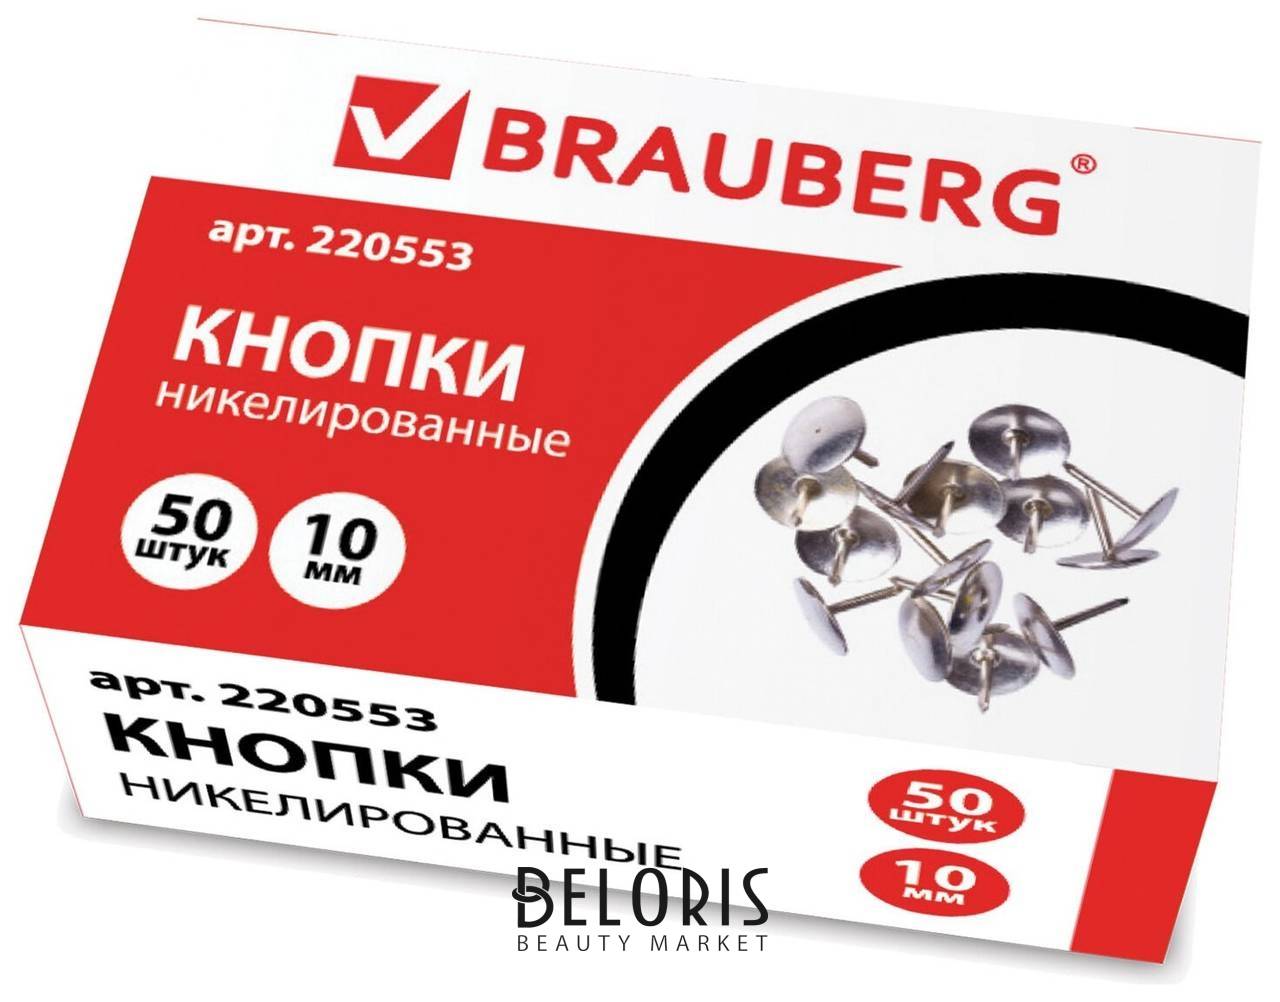 Кнопки канцелярские Brauberg, металлические, серебристые, 10 мм, 50 шт., в картонной коробке Brauberg